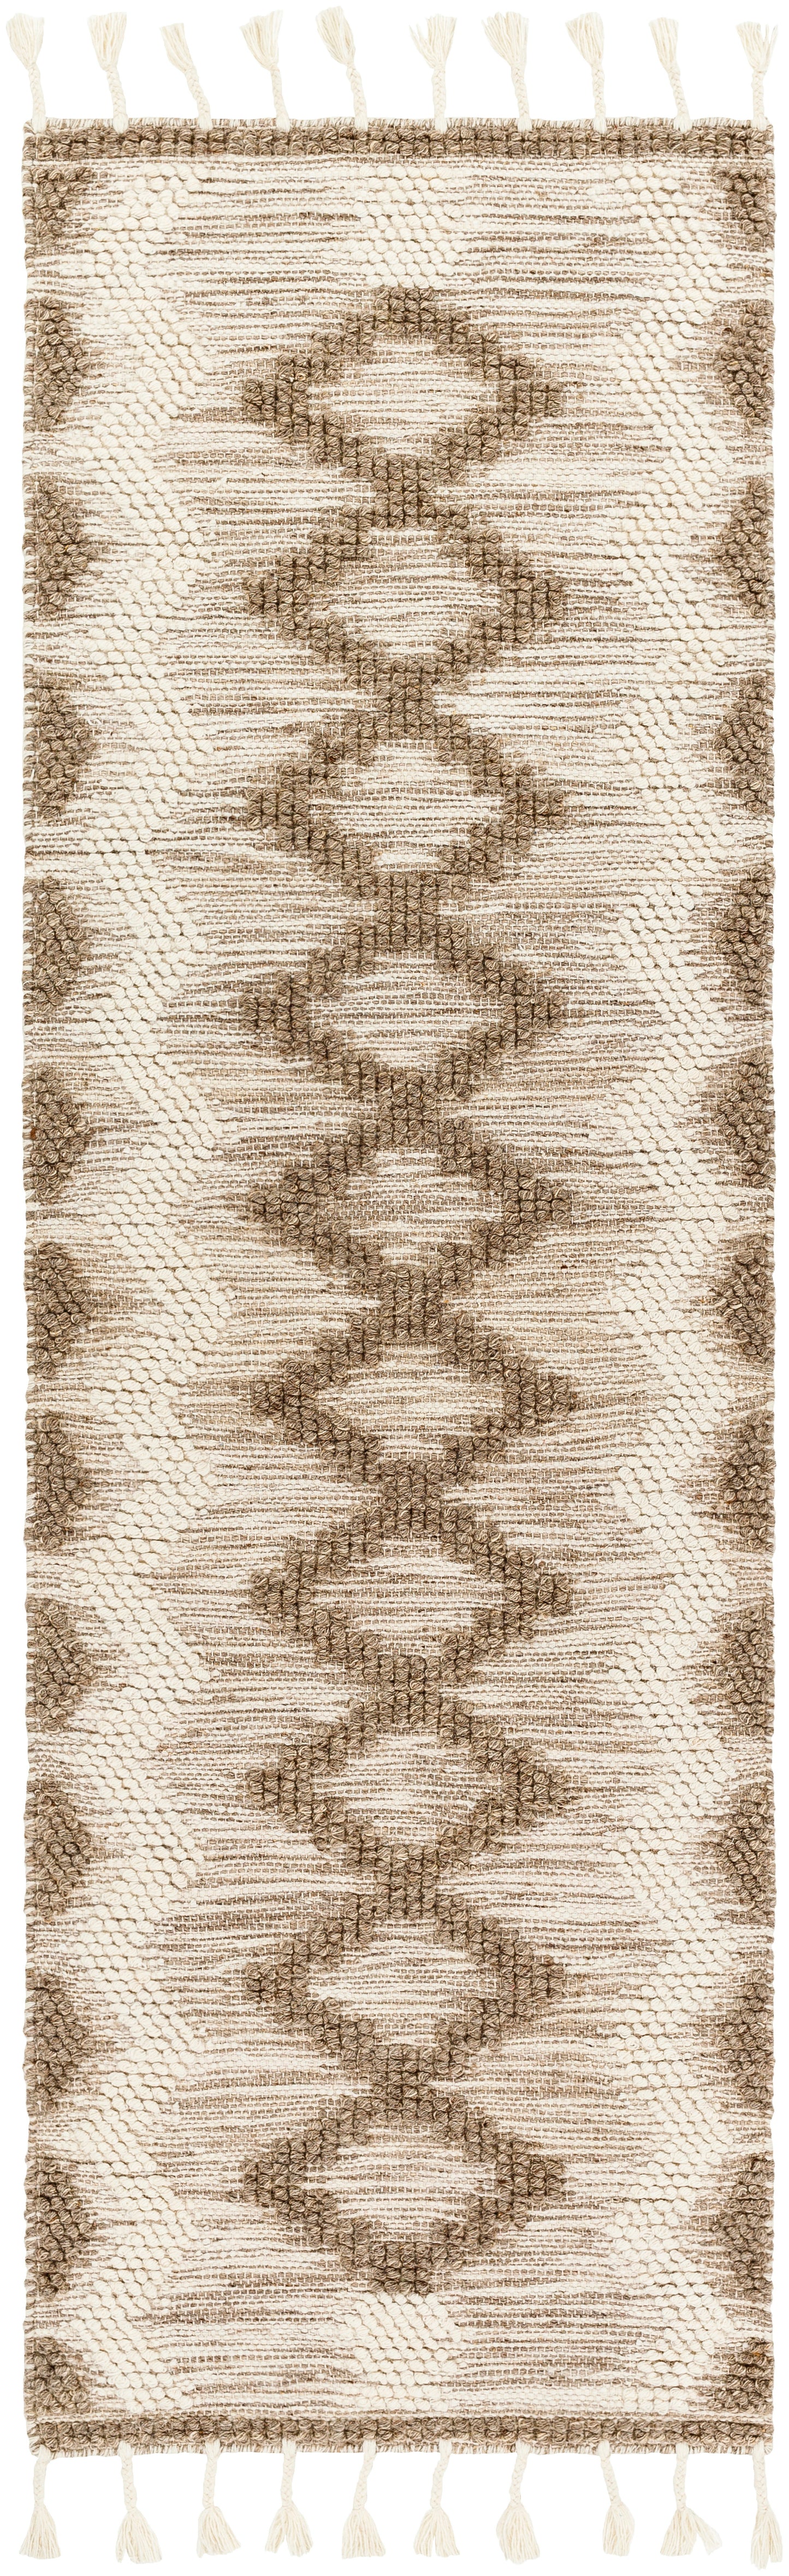 Norwood 30394 Hand Woven Wool Indoor Area Rug by Surya Rugs